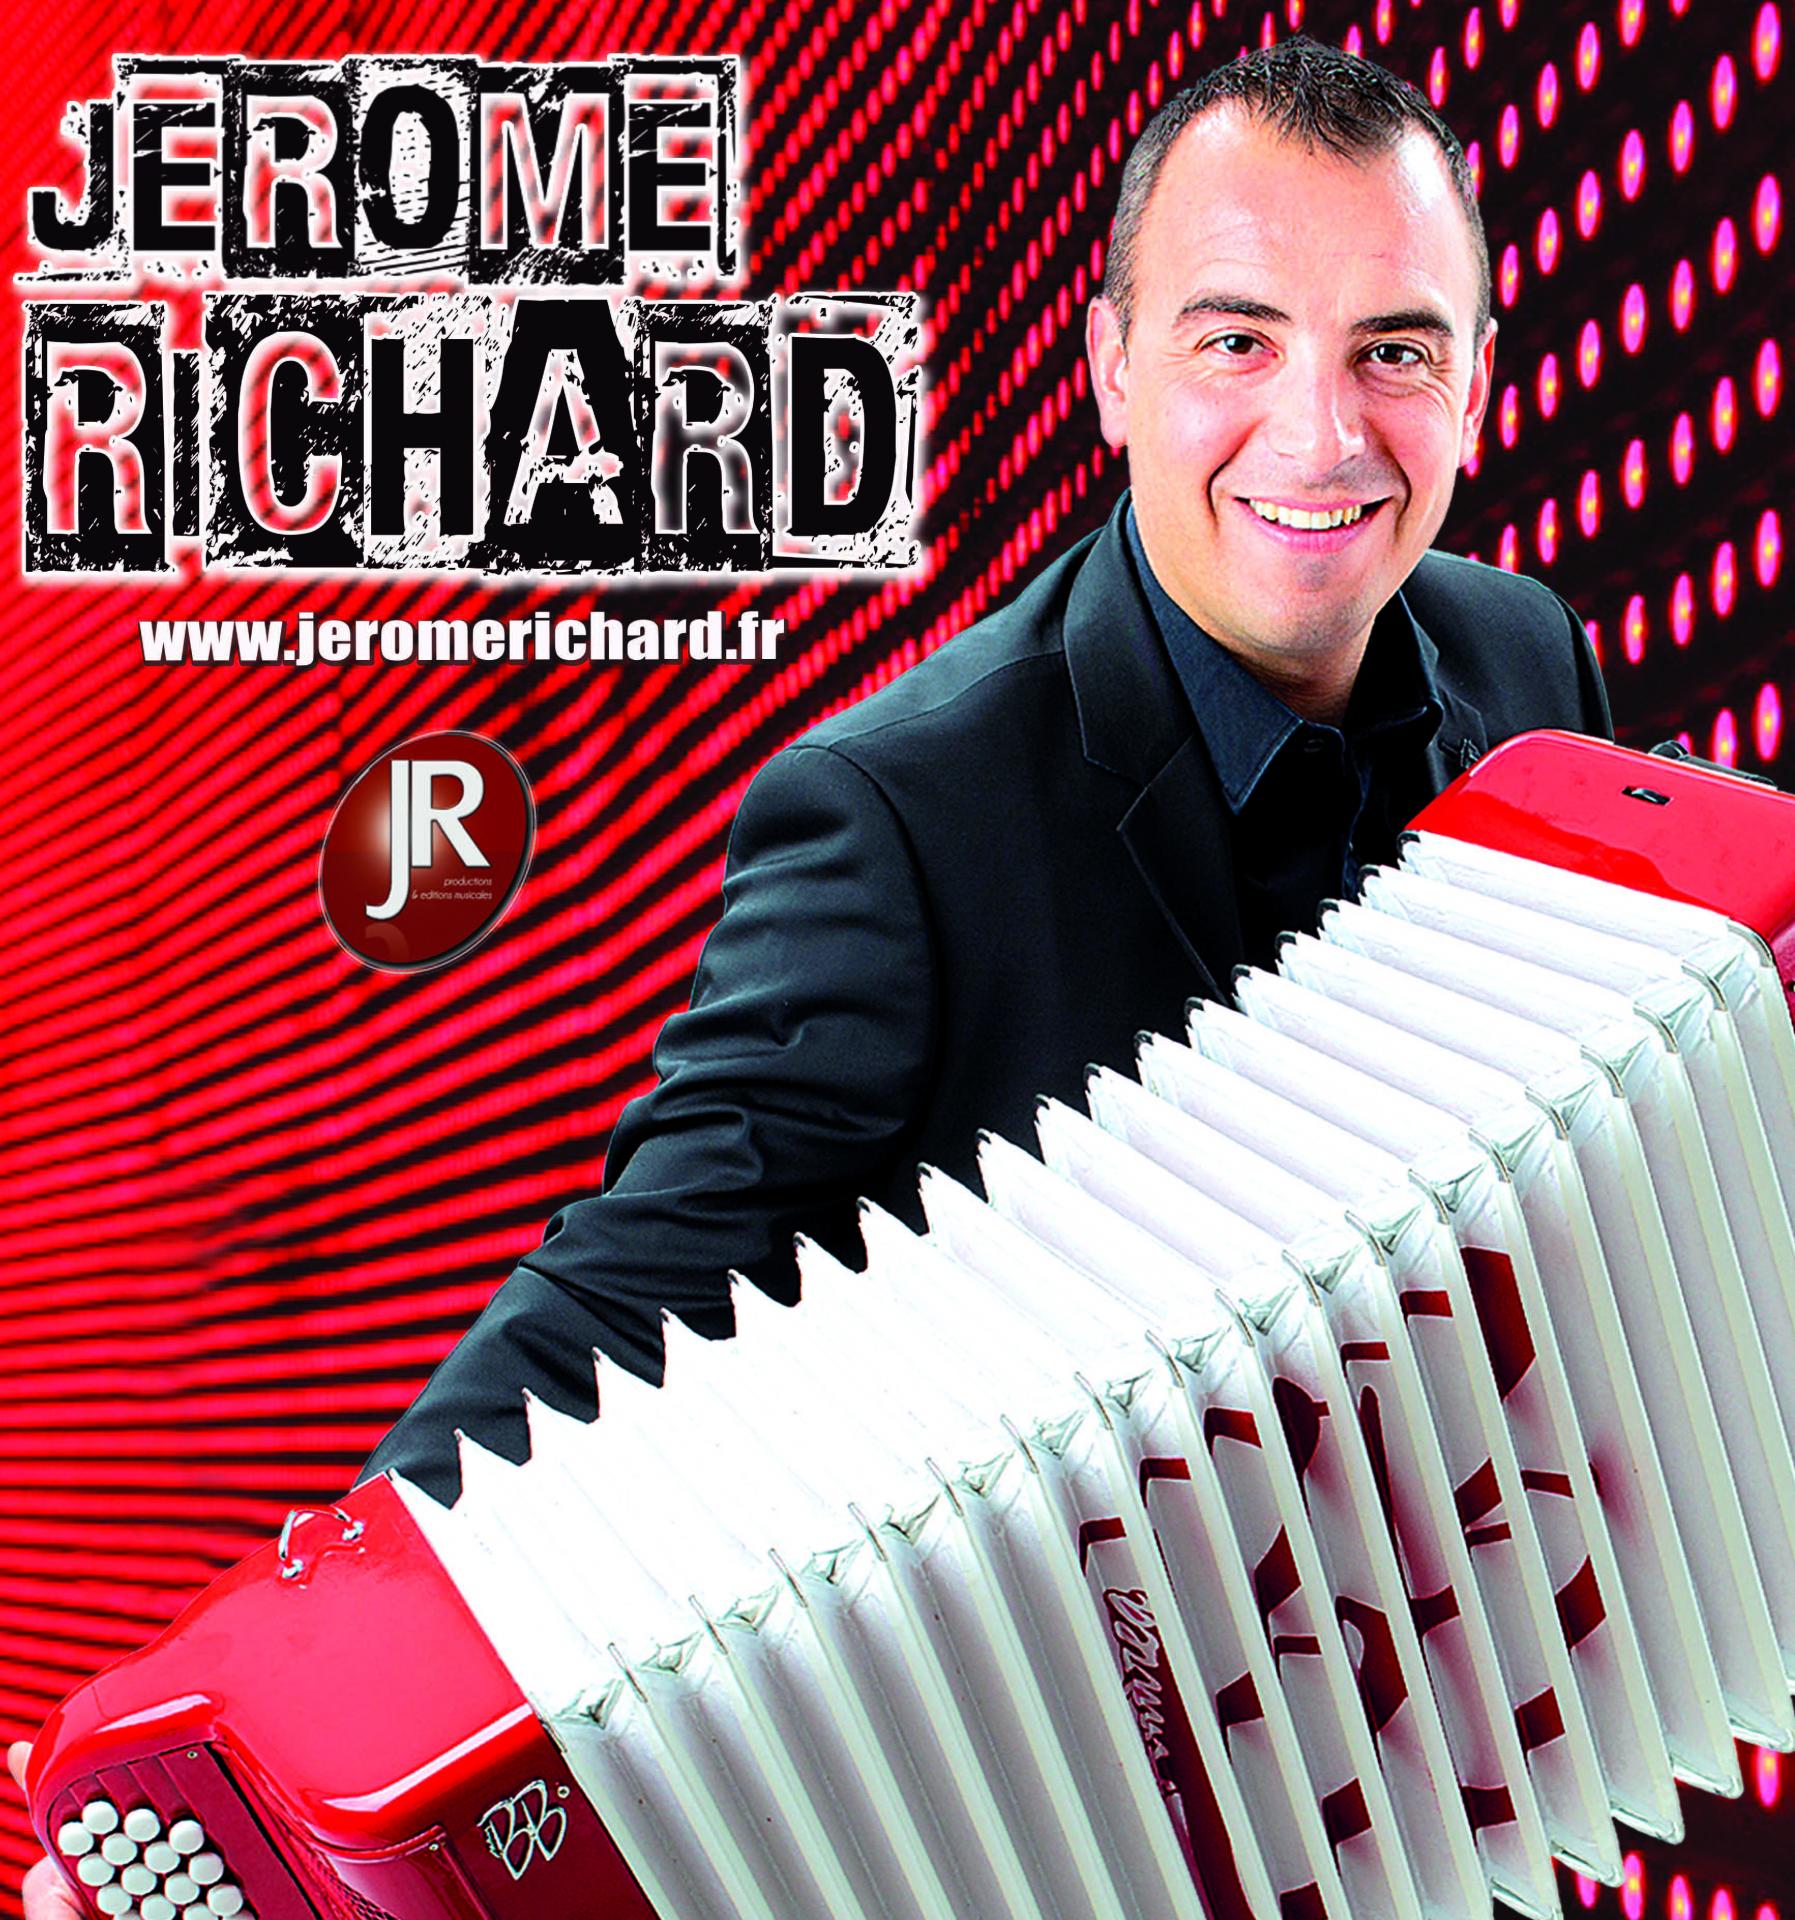 Jerome richard 1